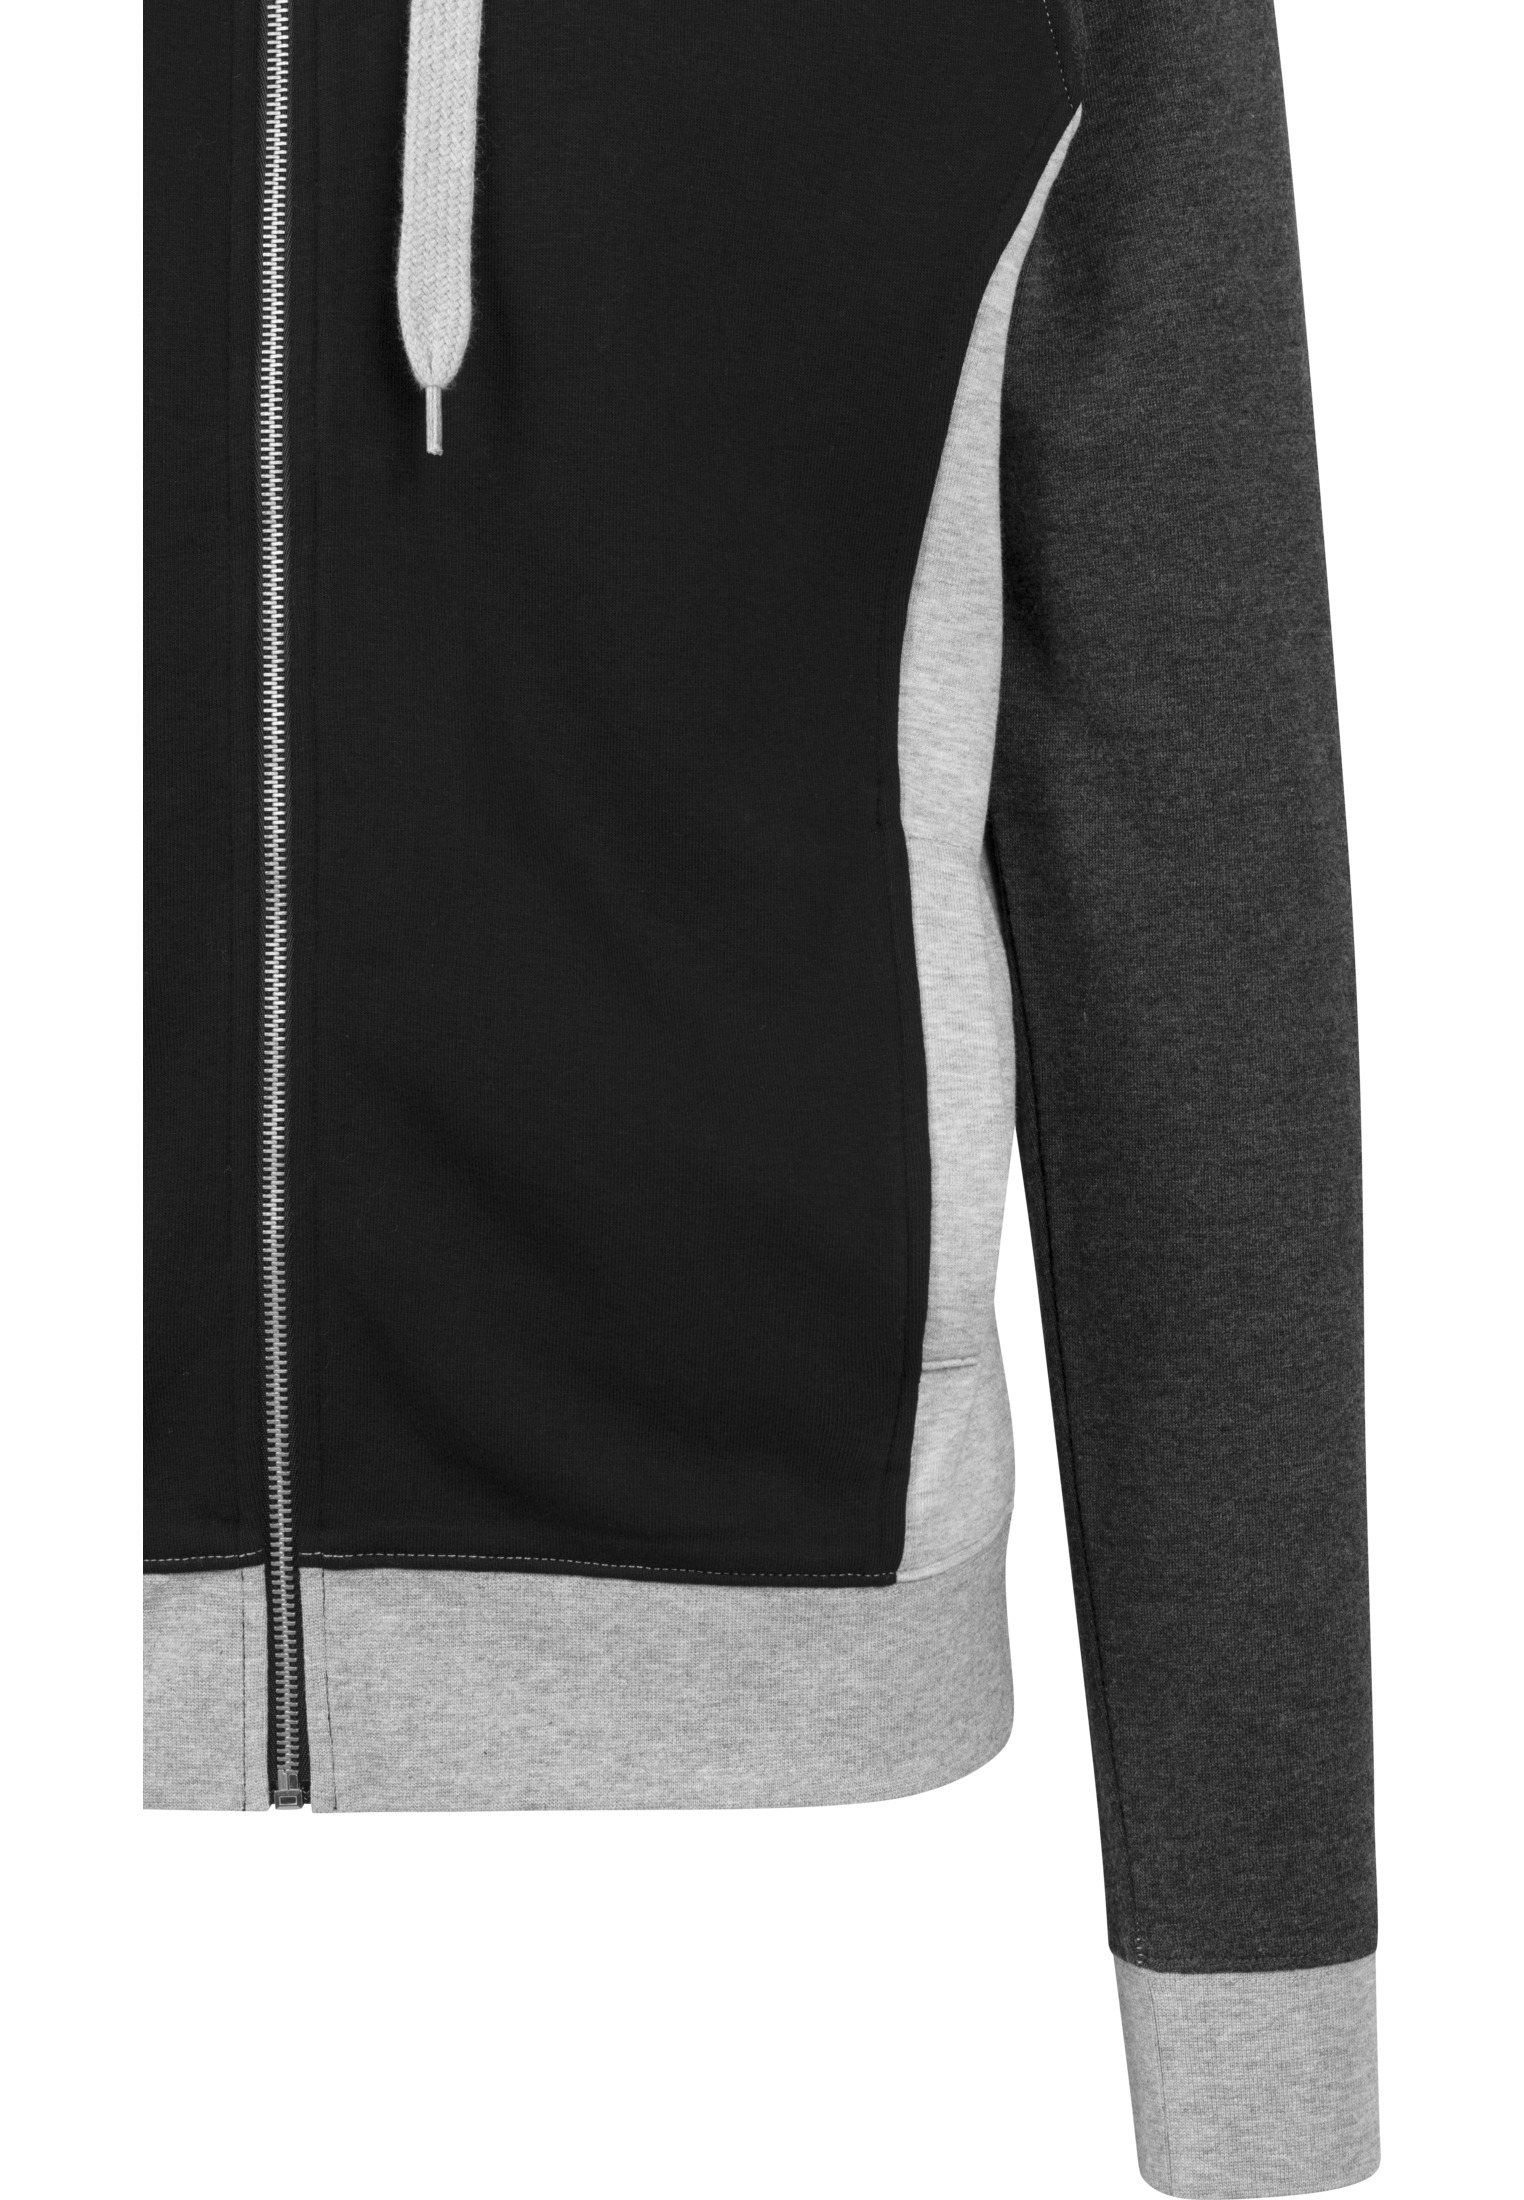 Zip Hoodies 3- Tone Sweat Zip Hoody in Farbe black/grey/charcoal